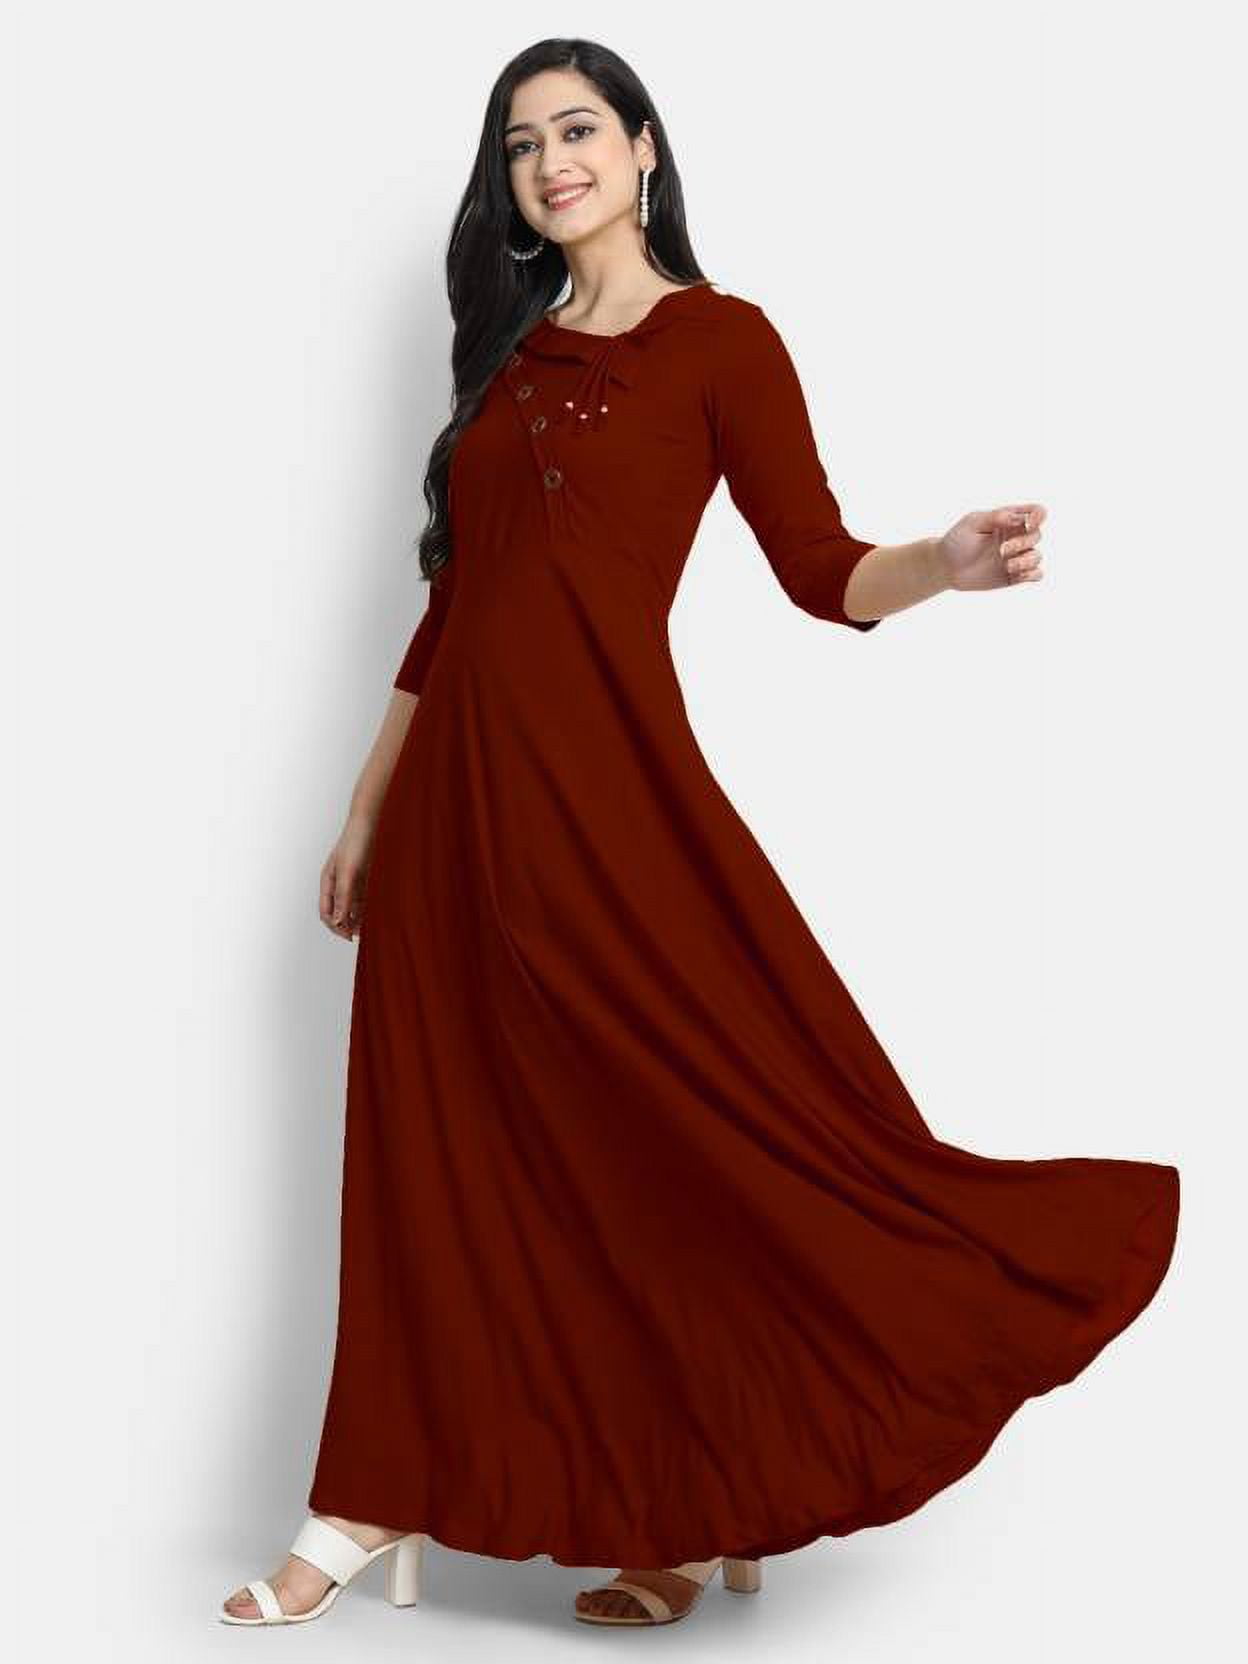 Asian Indian Pakistani Party Wear Wedding Maxi Dress Unstitched | eBay